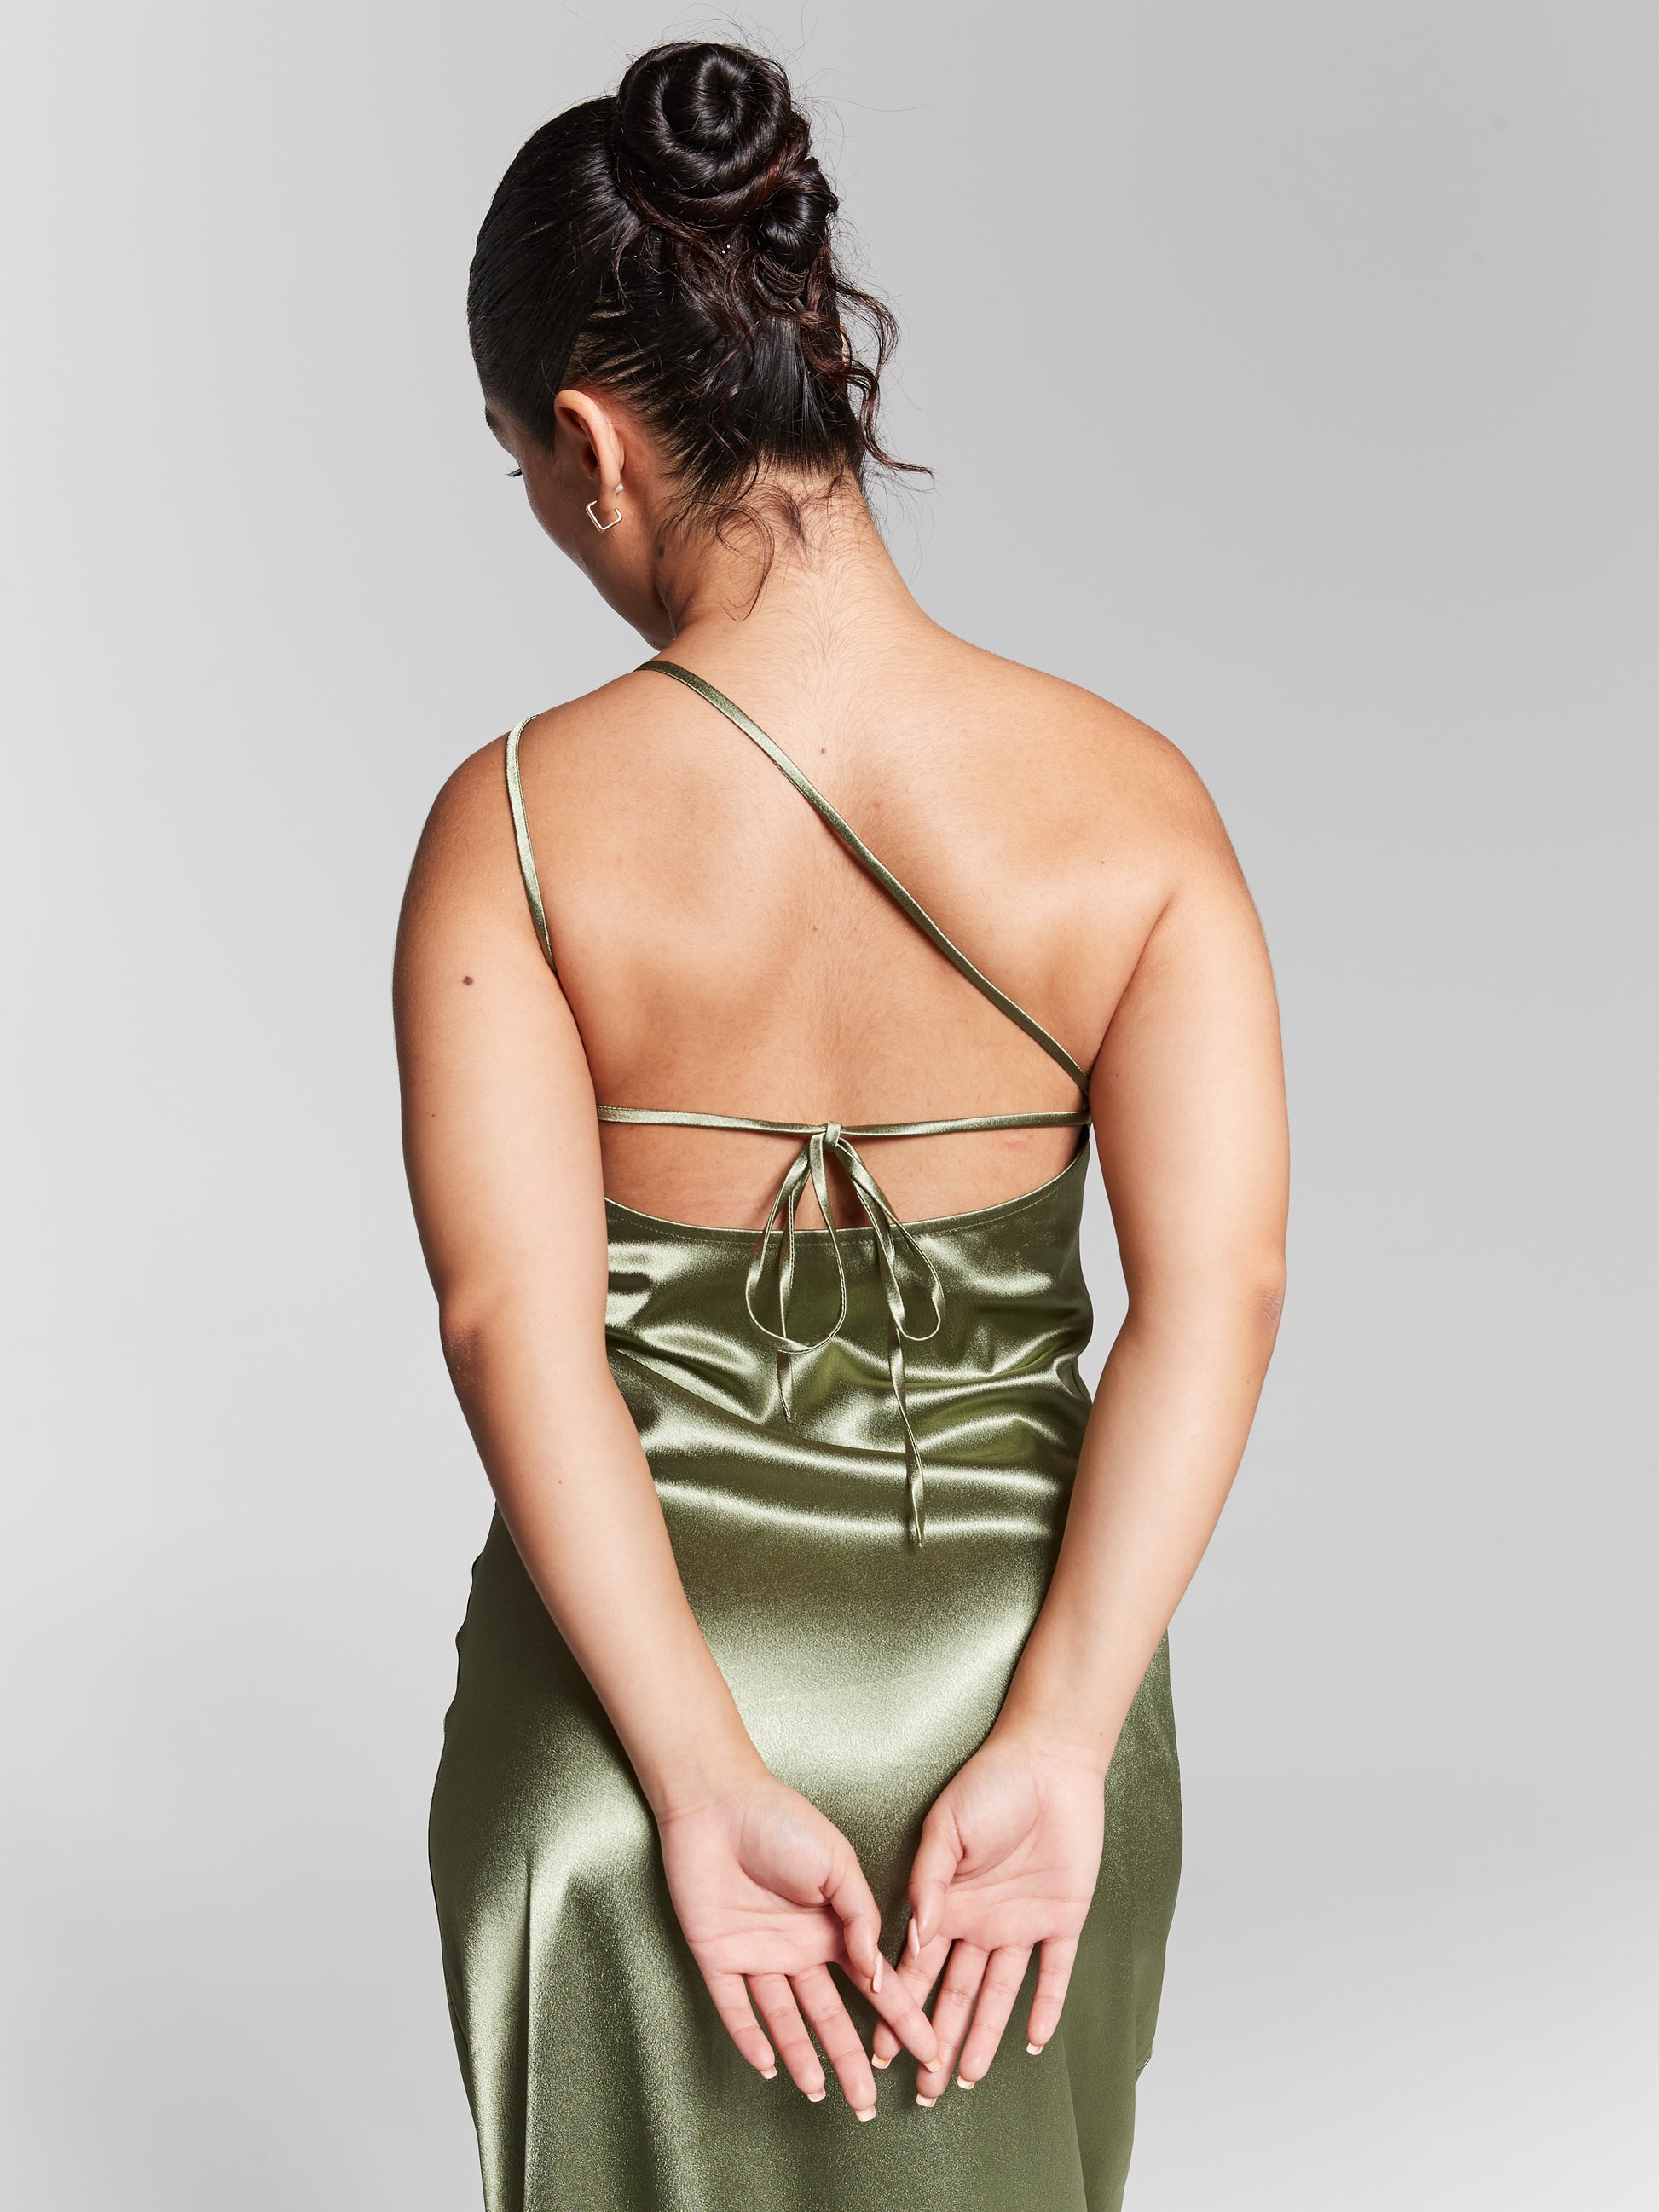 Olive Satin Dress - One-Shoulder Midi Dress - Backless Midi Dress